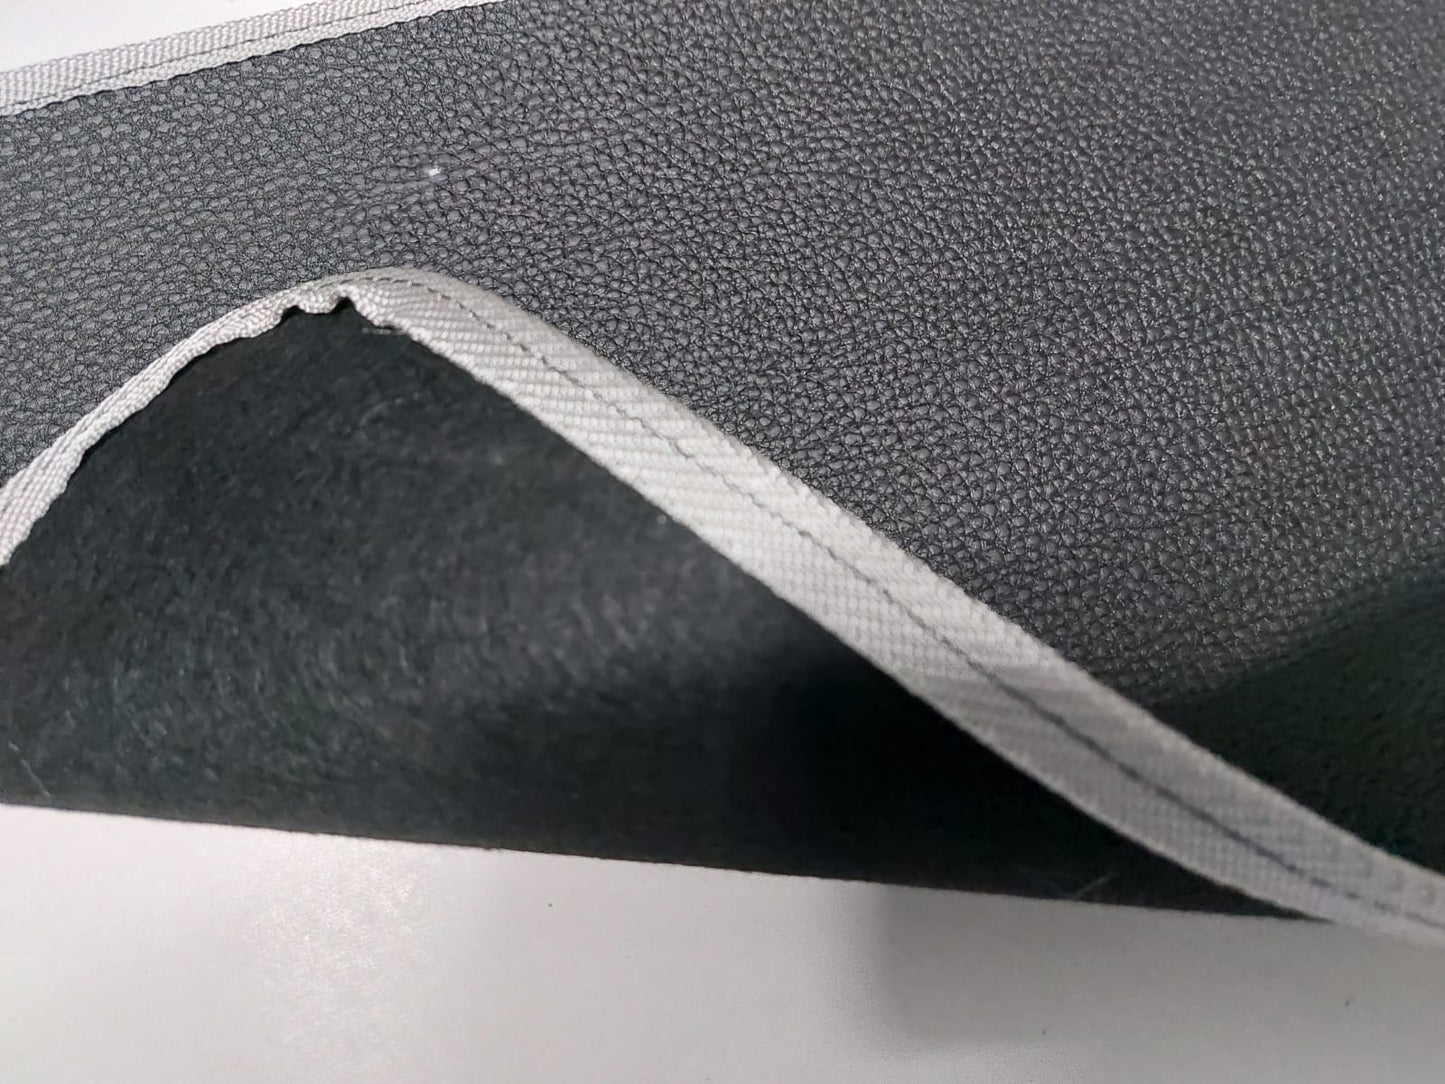 Nissan Nismo Universal PVC Leather Floor Mats Set of 5